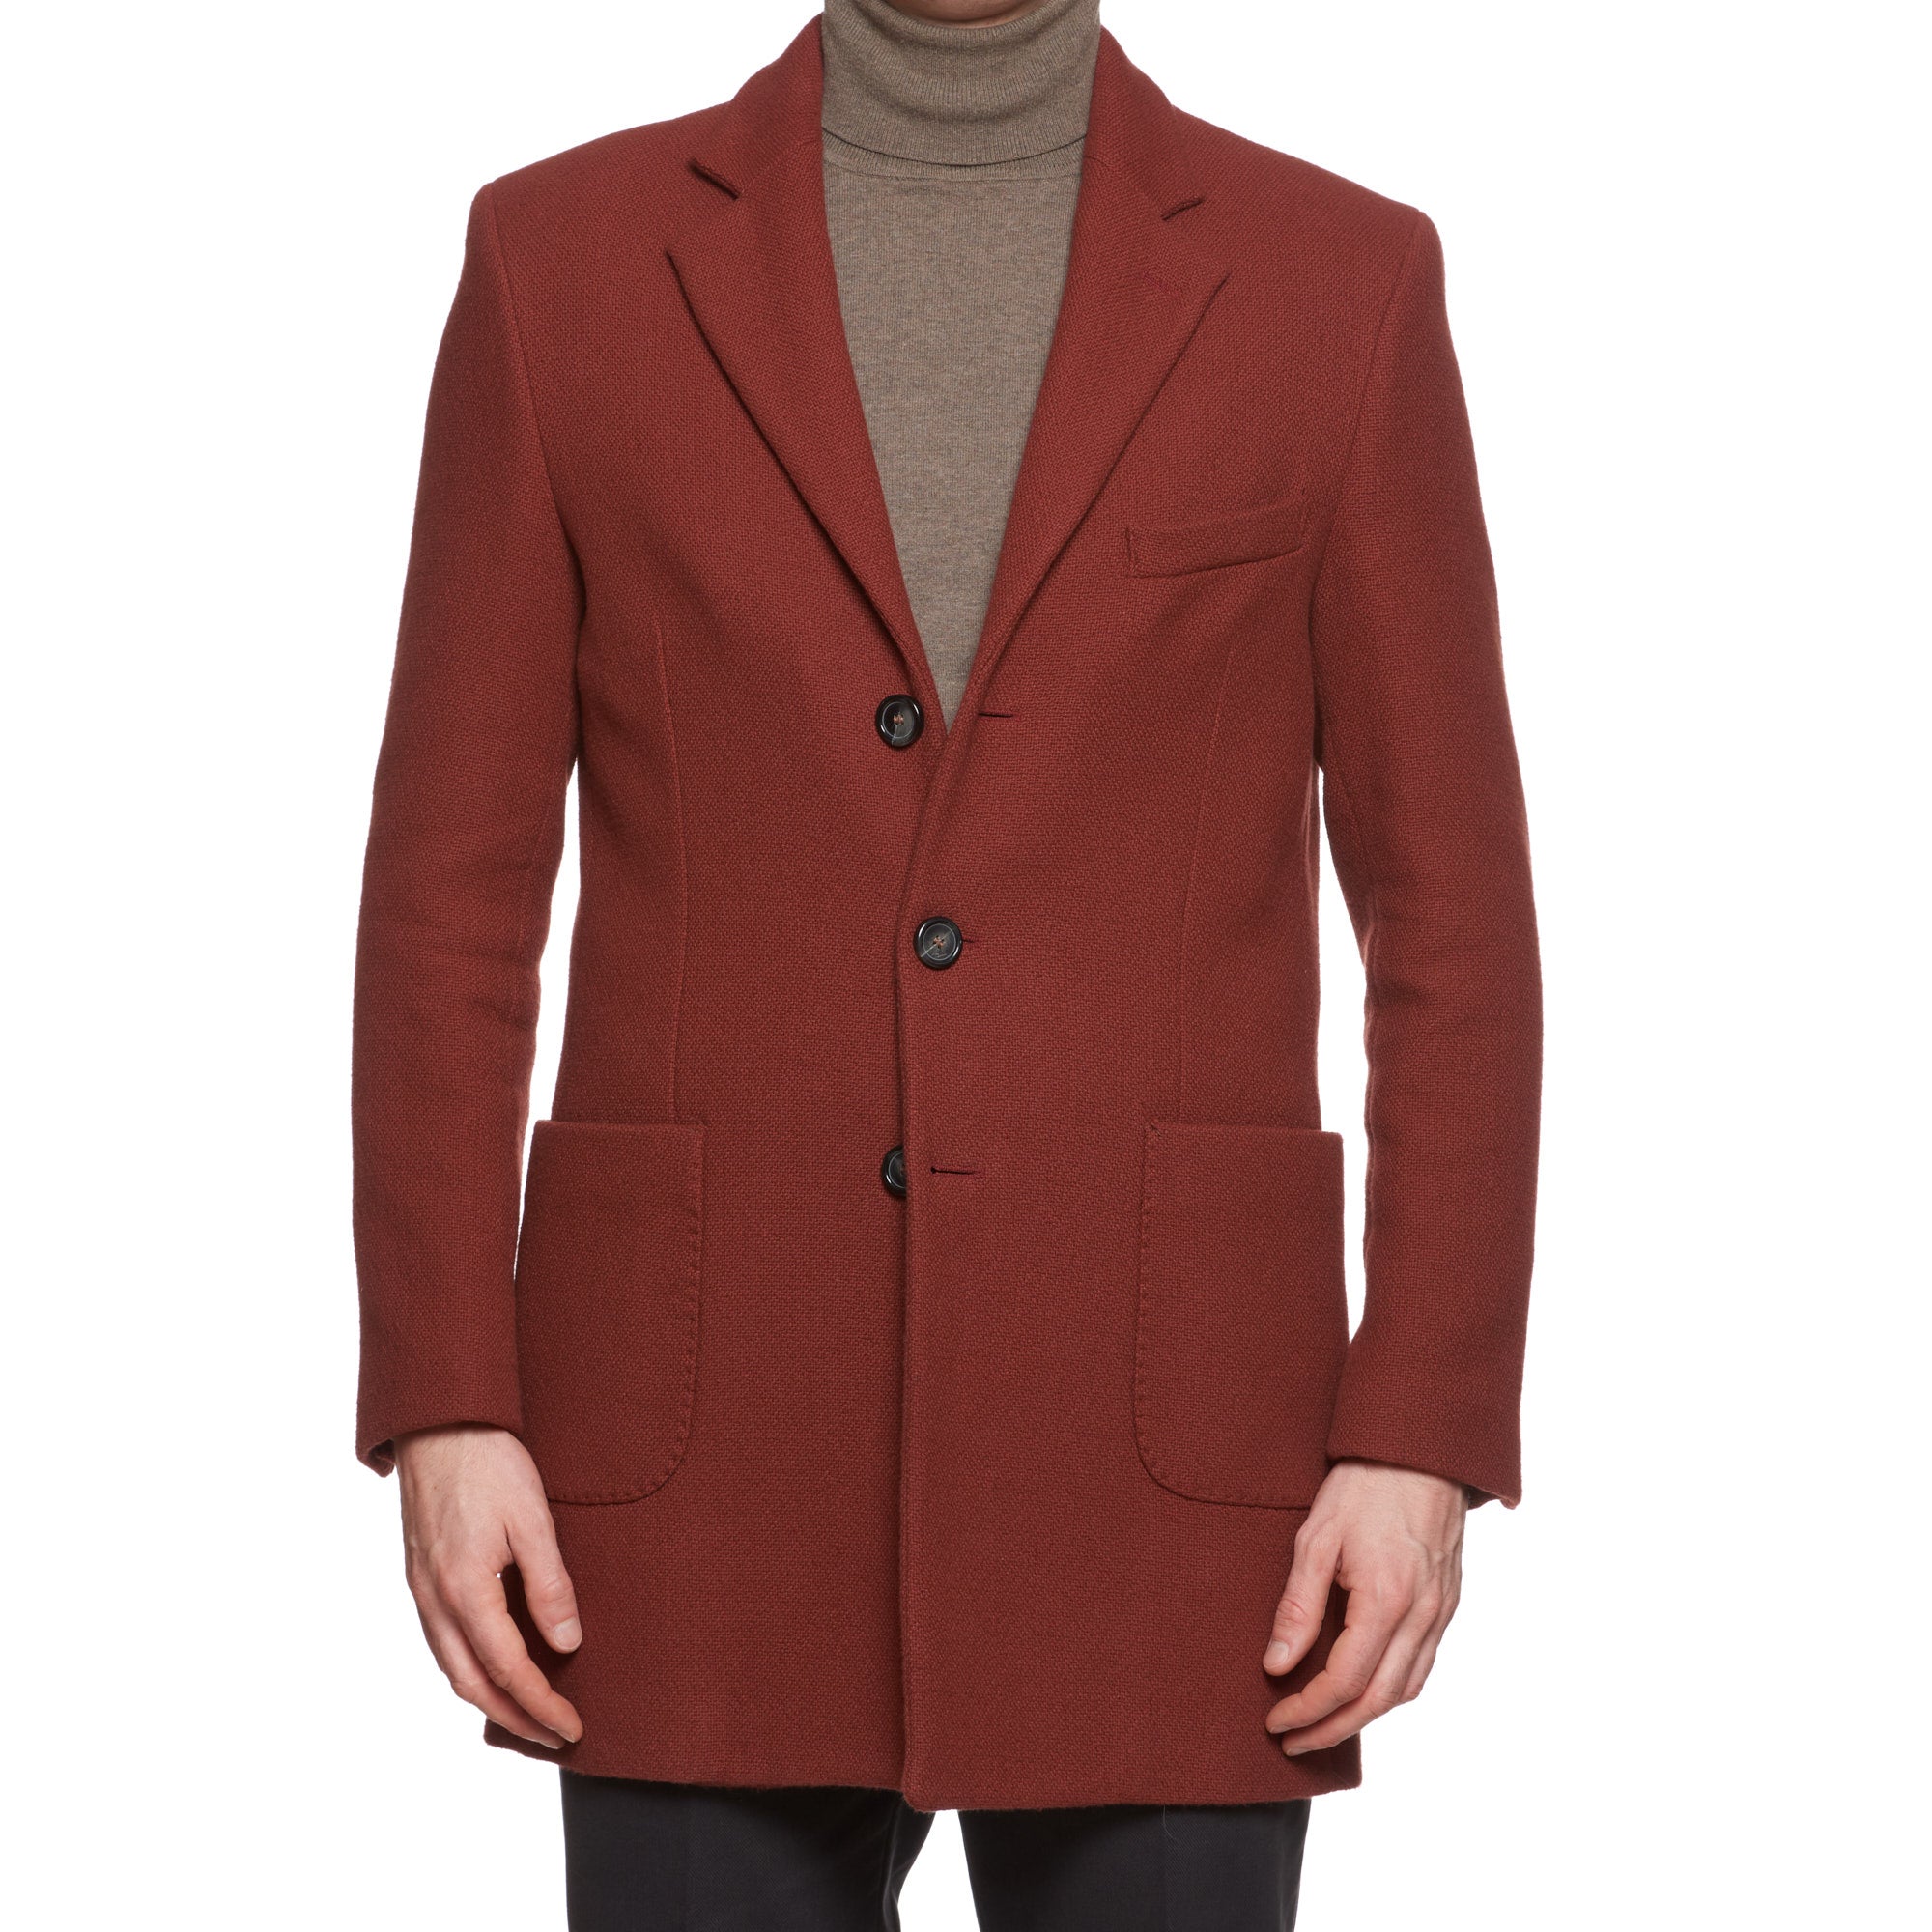 DAVID BROWN Brick Red Wool Hopsack Jacket Coat NEW Size M US 40 Slim Fit